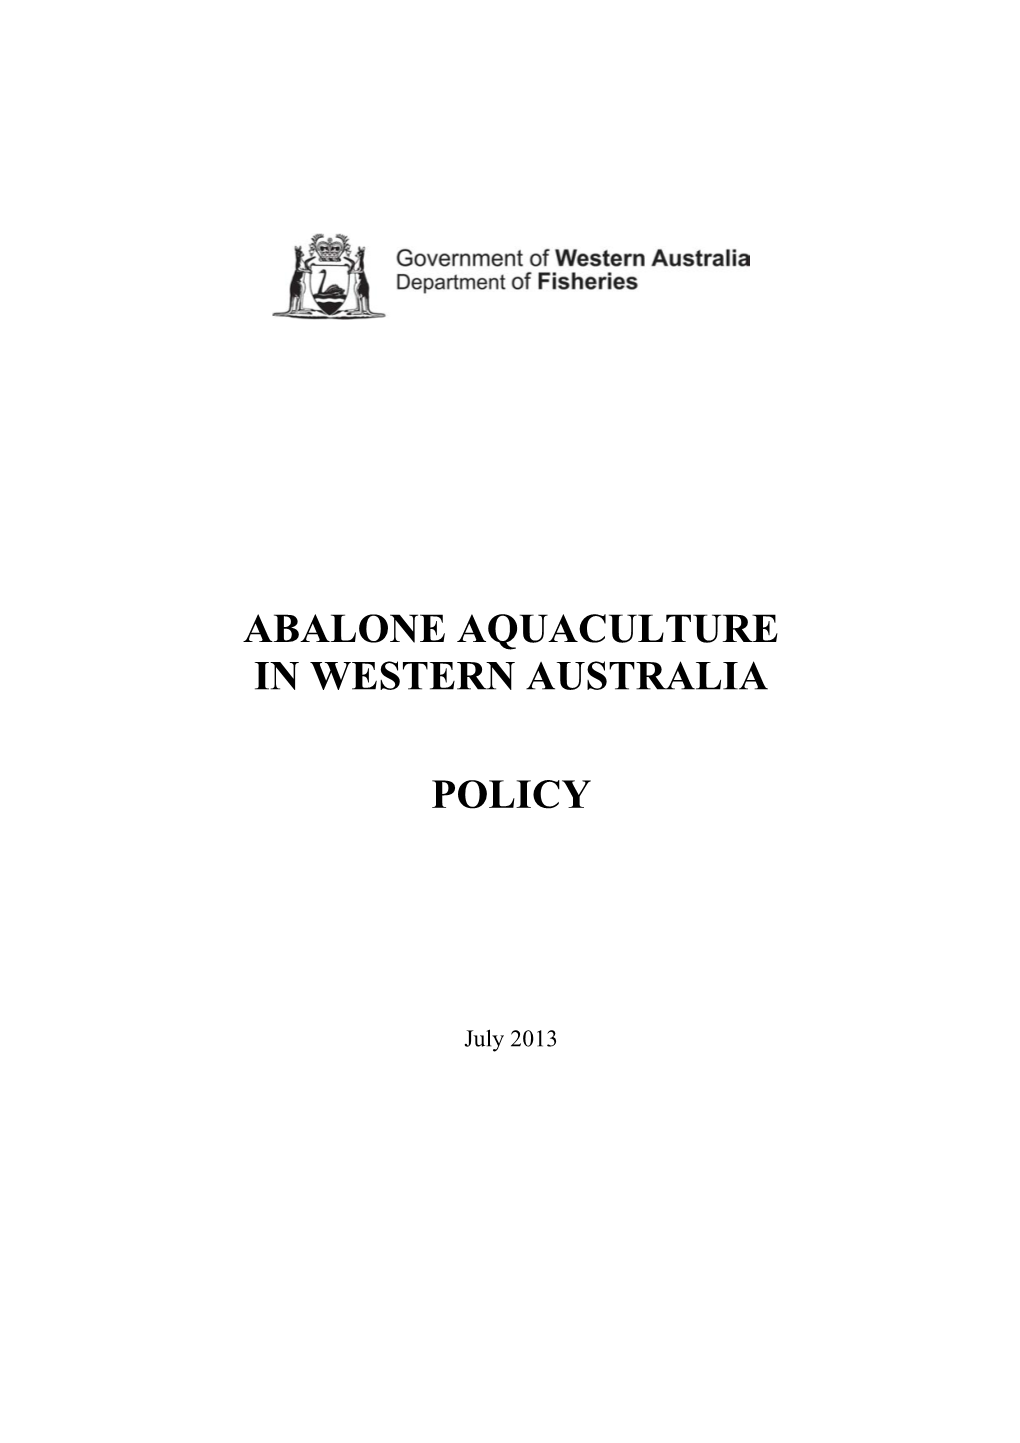 Abalone Aquaculture Policy in Western Australia